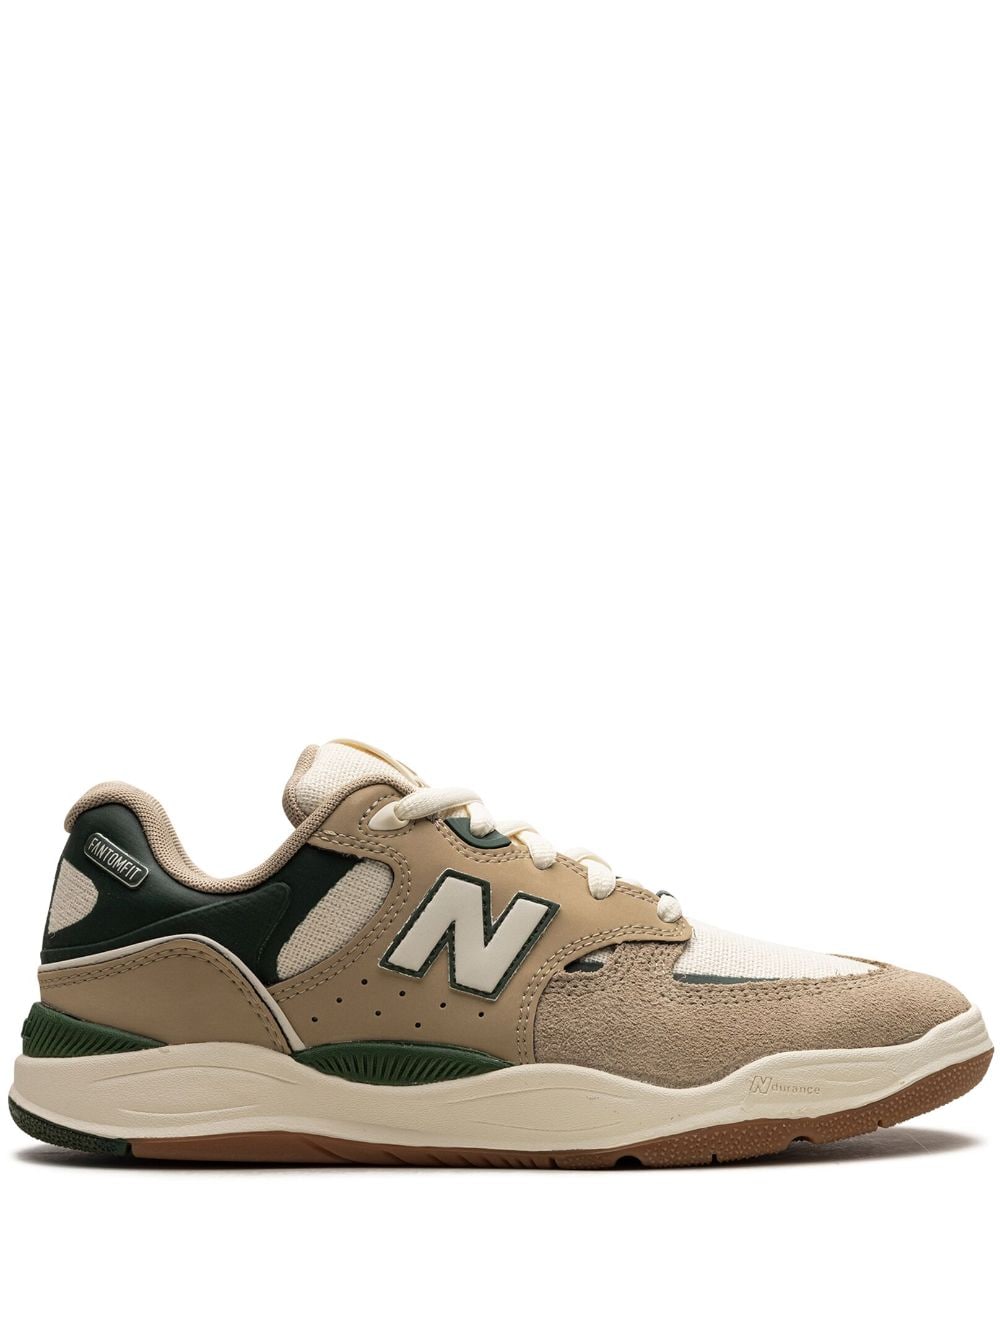 New Balance Numeric 1010 "Brown / Green" sneakers von New Balance